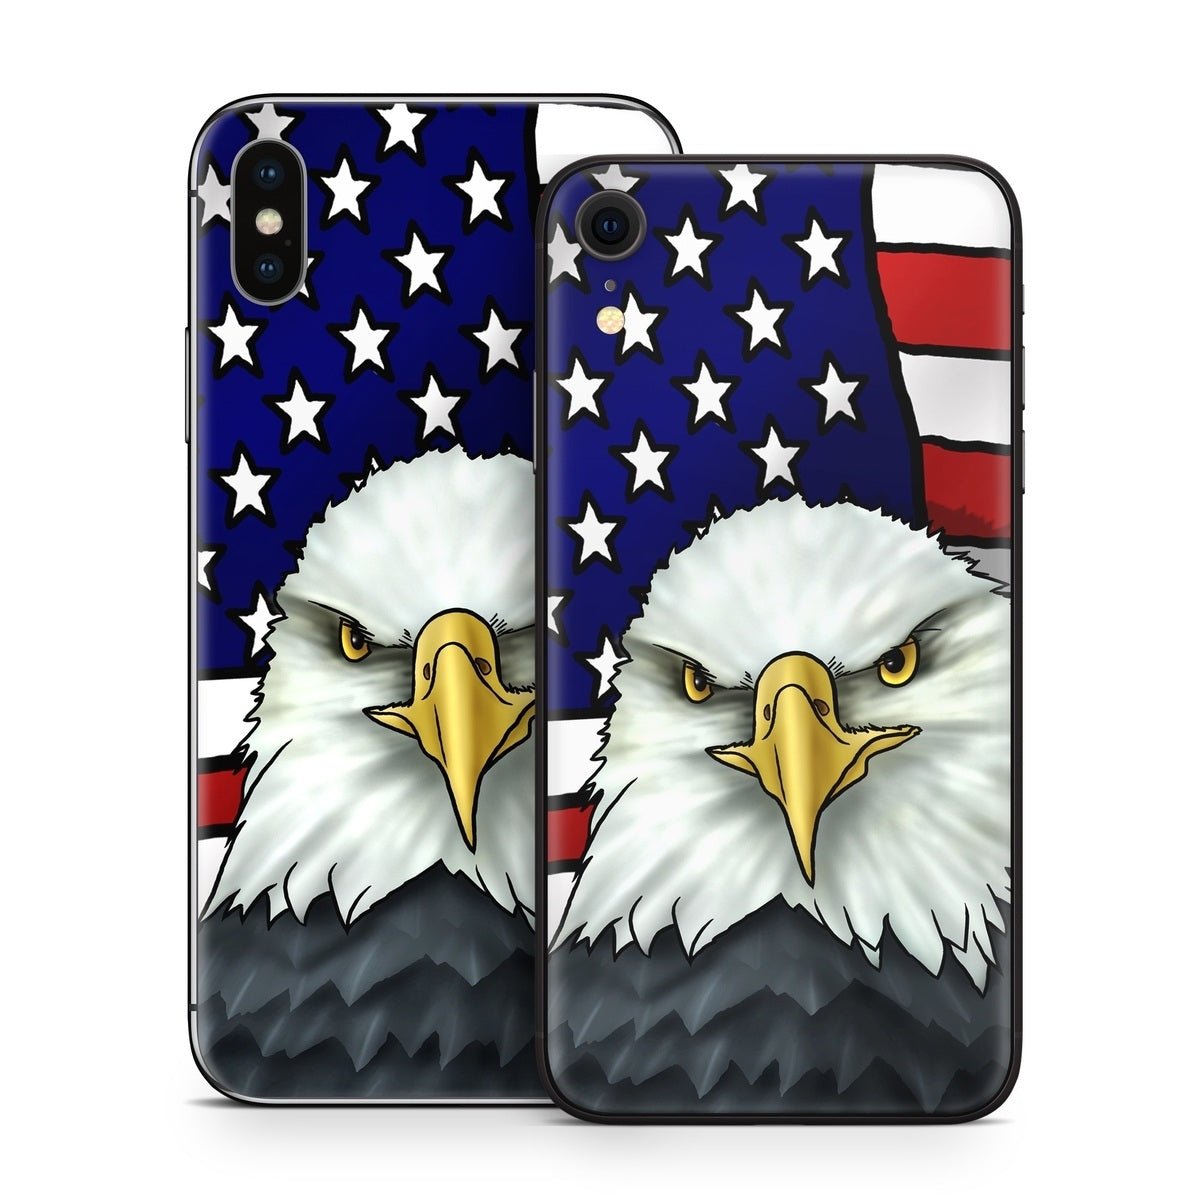 American Eagle - Apple iPhone X Skin - Flags - DecalGirl